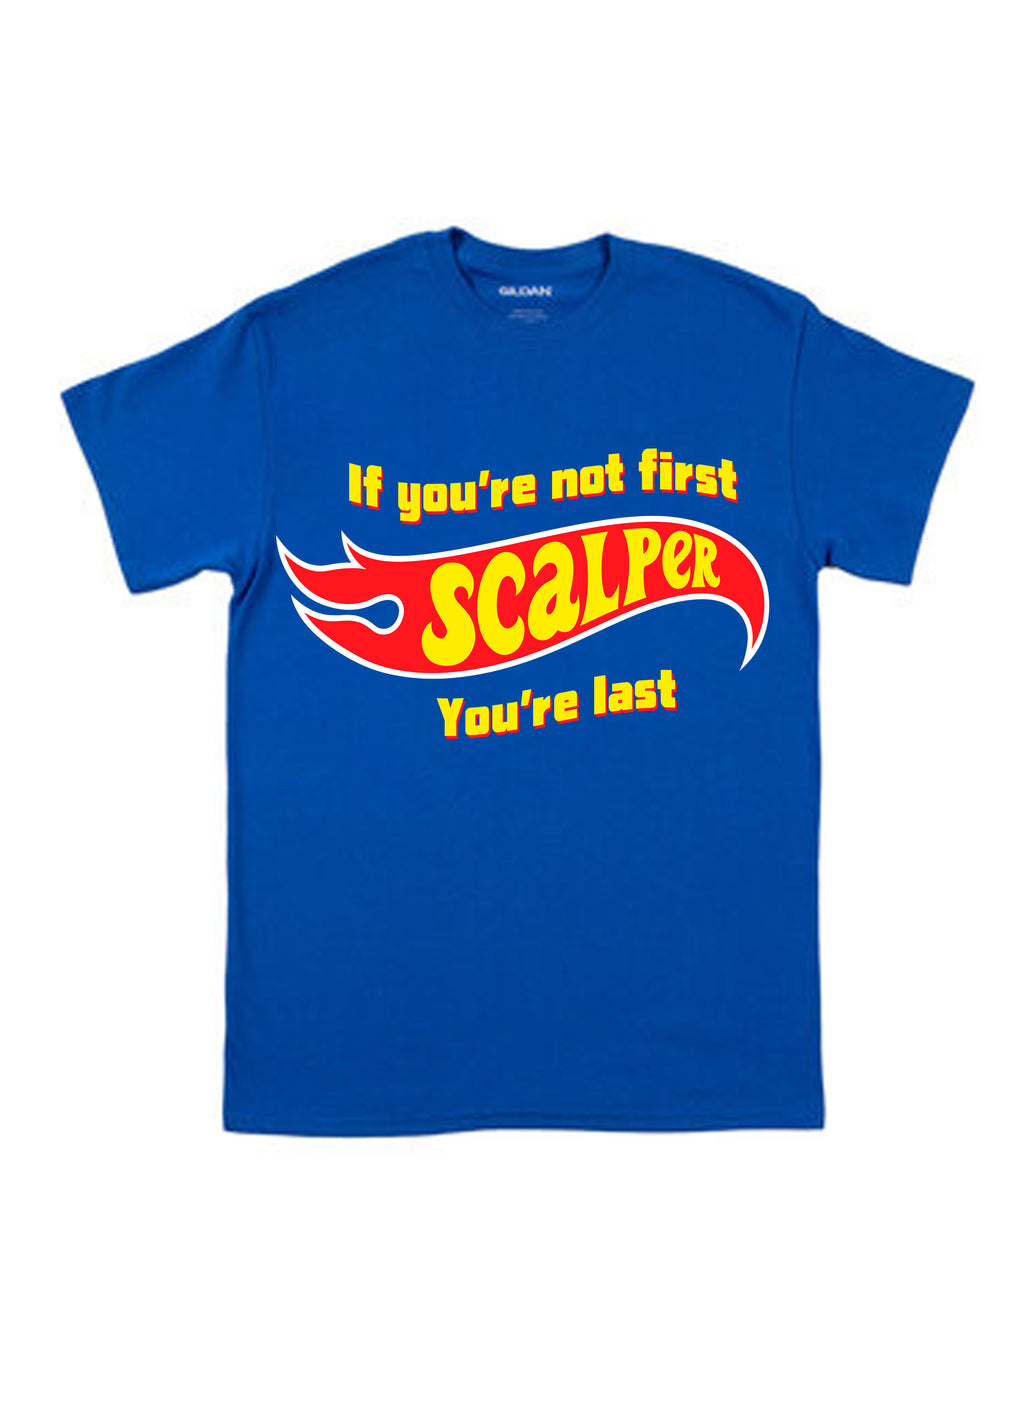 Scalper T-Shirt Size 2x Large